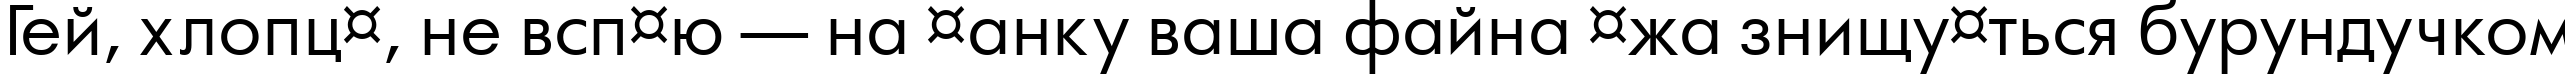 Пример написания шрифтом a_FuturaOrto текста на украинском